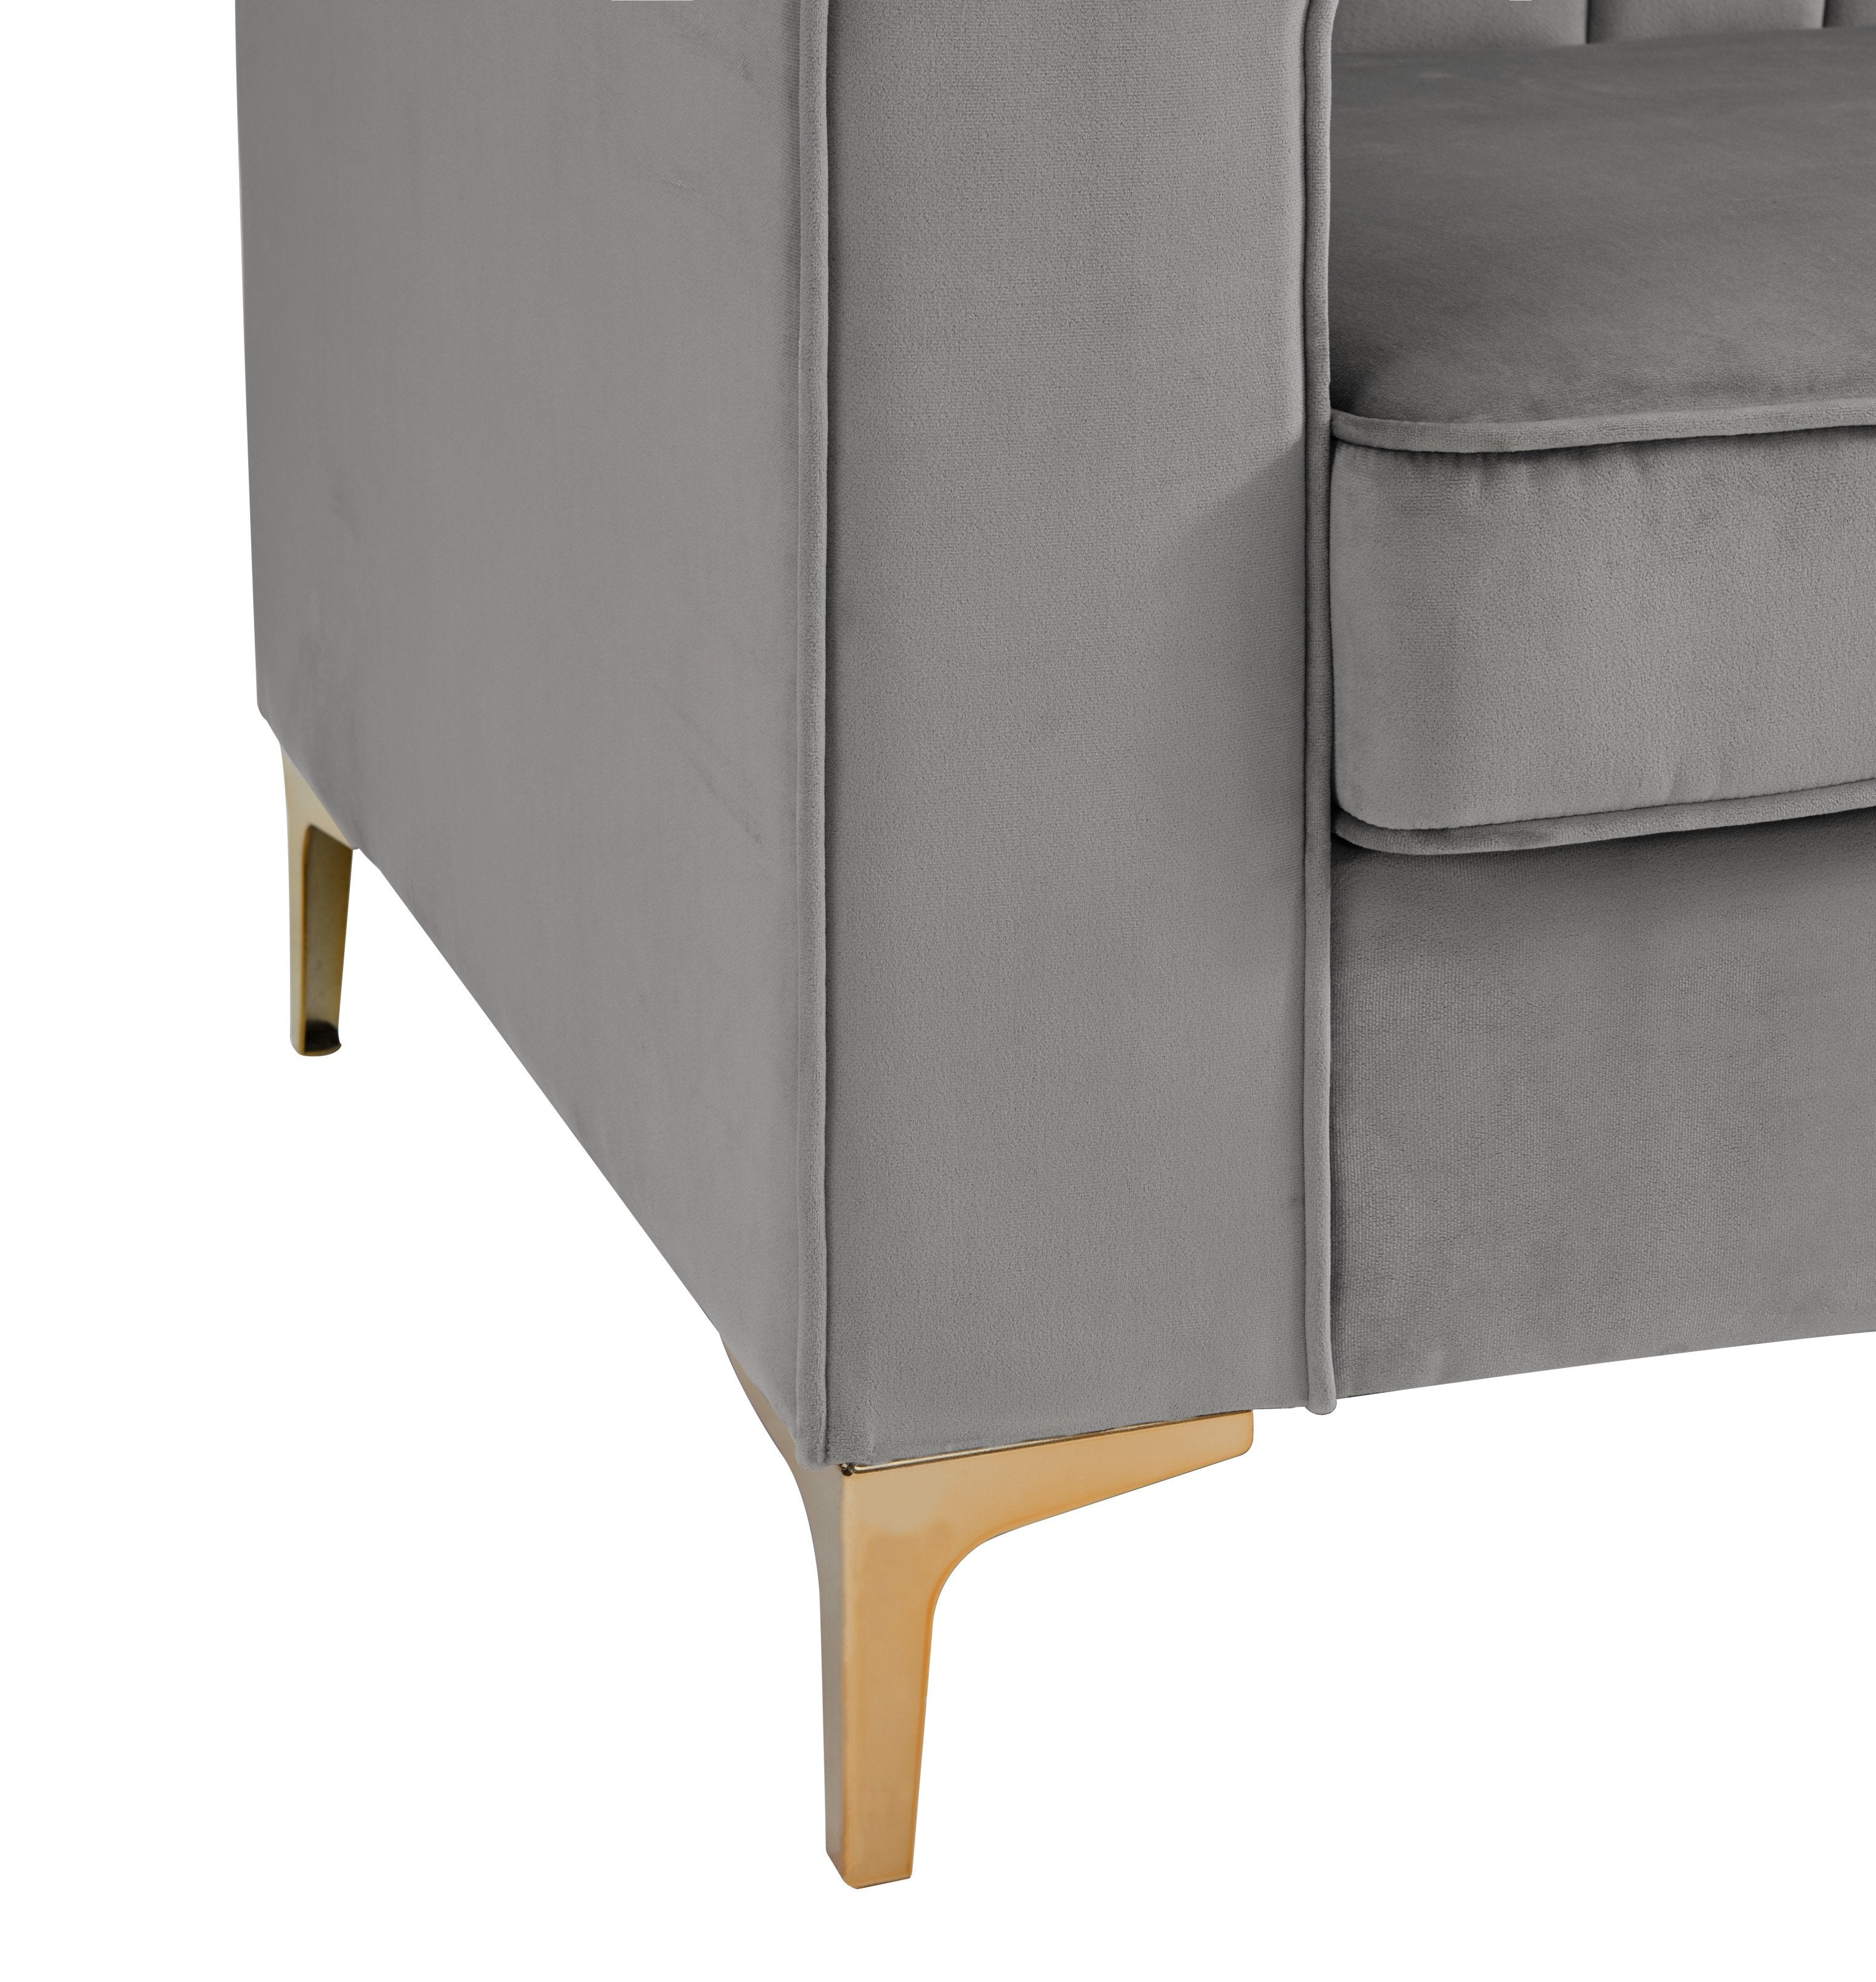 Britannia Modular Chaise Velvet Sectional Sofa With Gold Legs